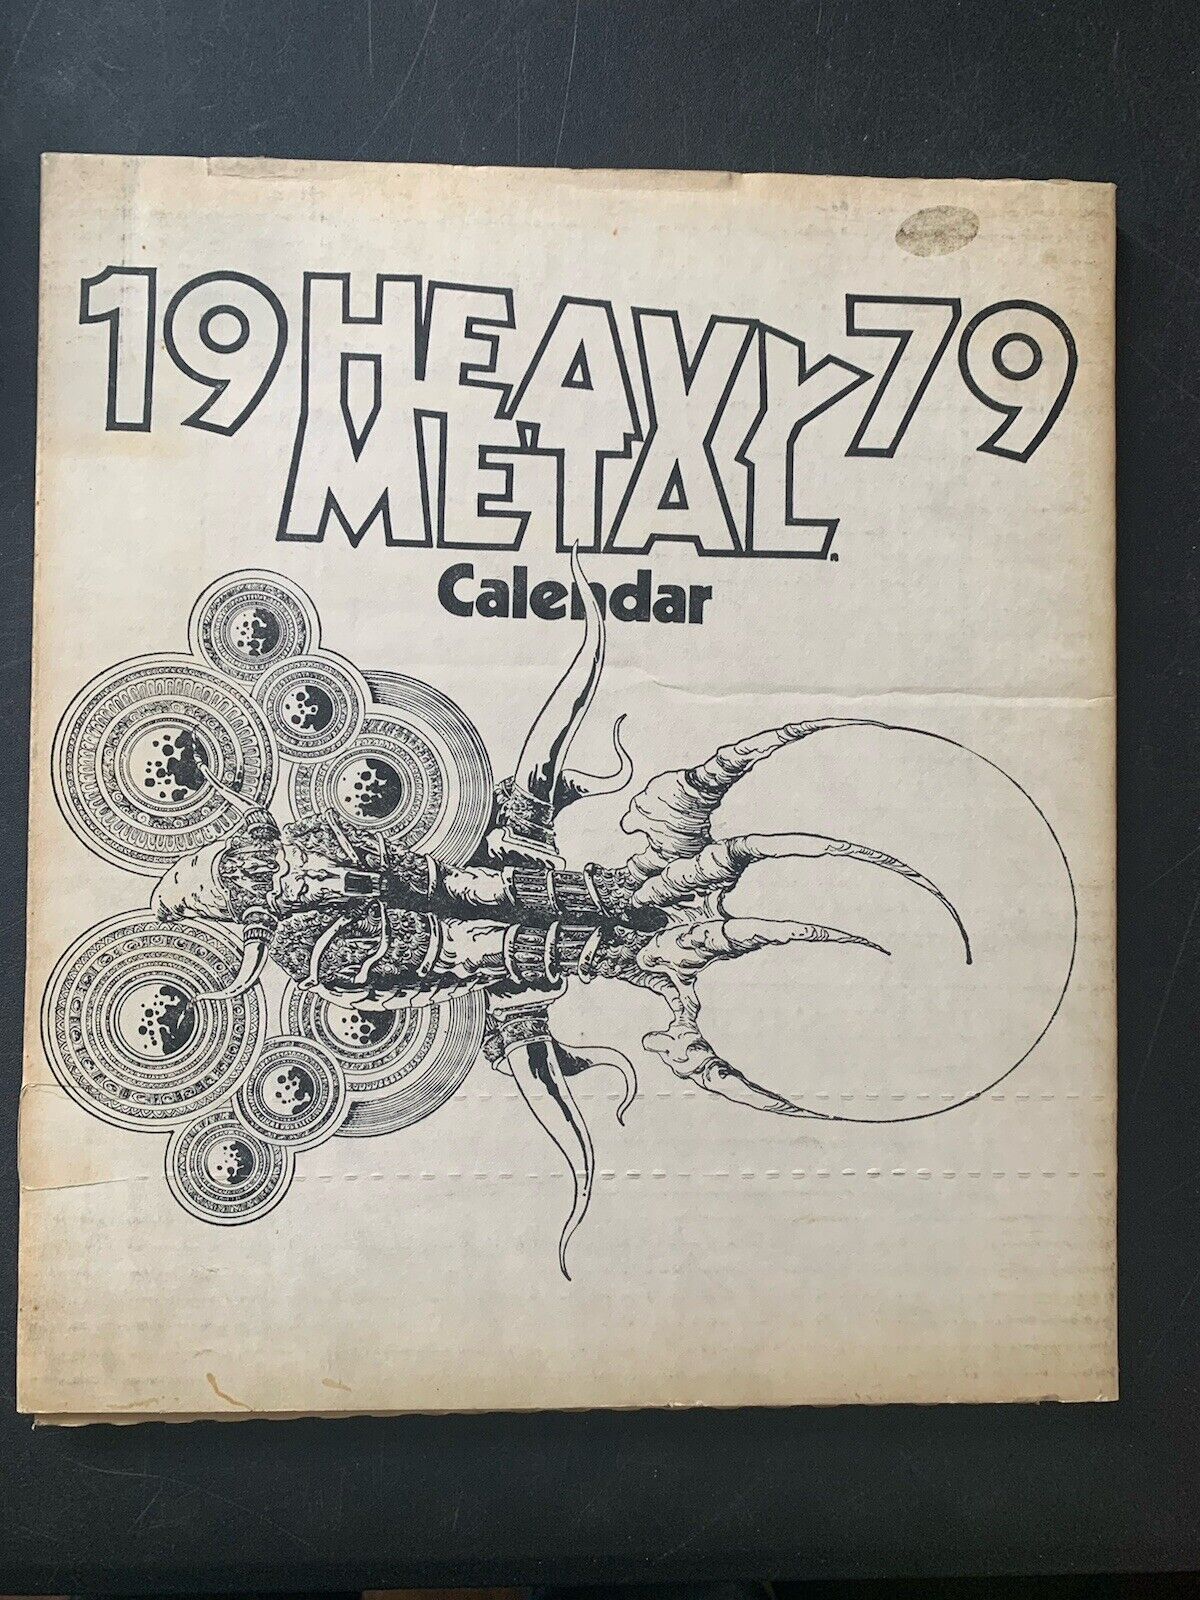 HEAVY METAL Calendar from 1979 / STILL IN THE ORIGINAL NEW UNOPENED